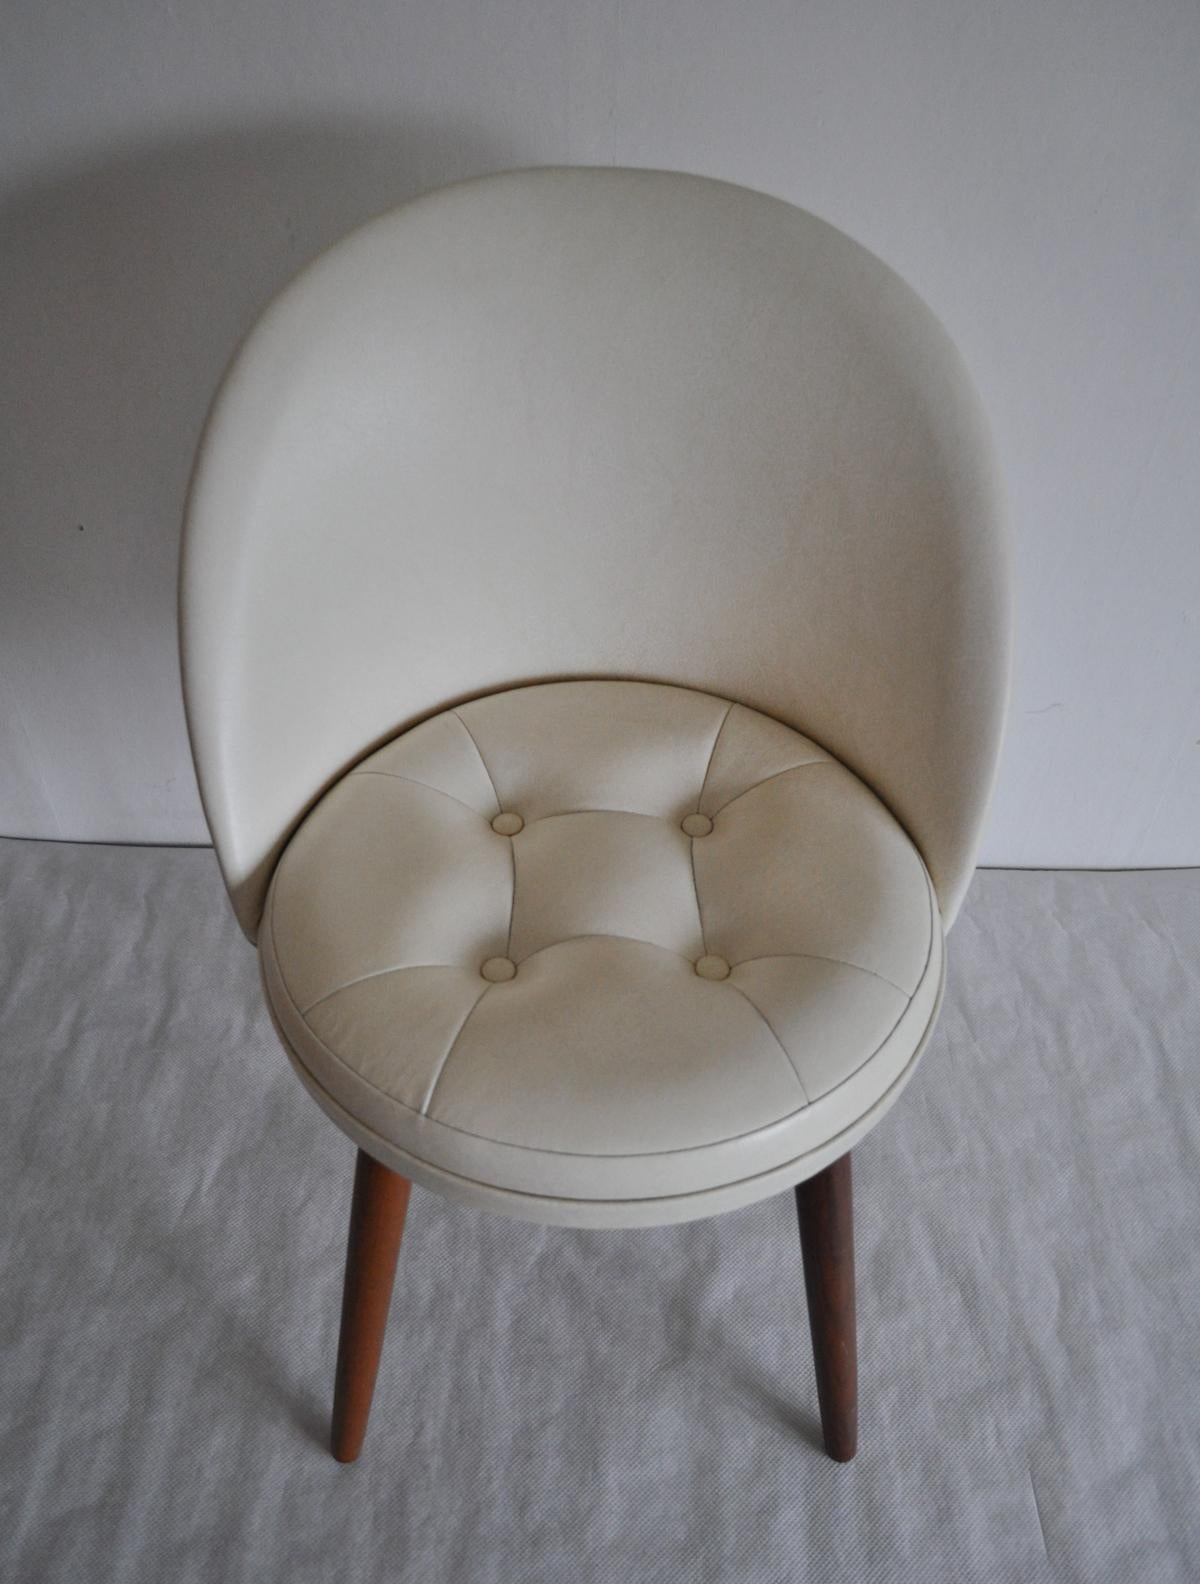 20th Century Elegant Scandinavian Modern Vanity Chair Designed in the 1950s